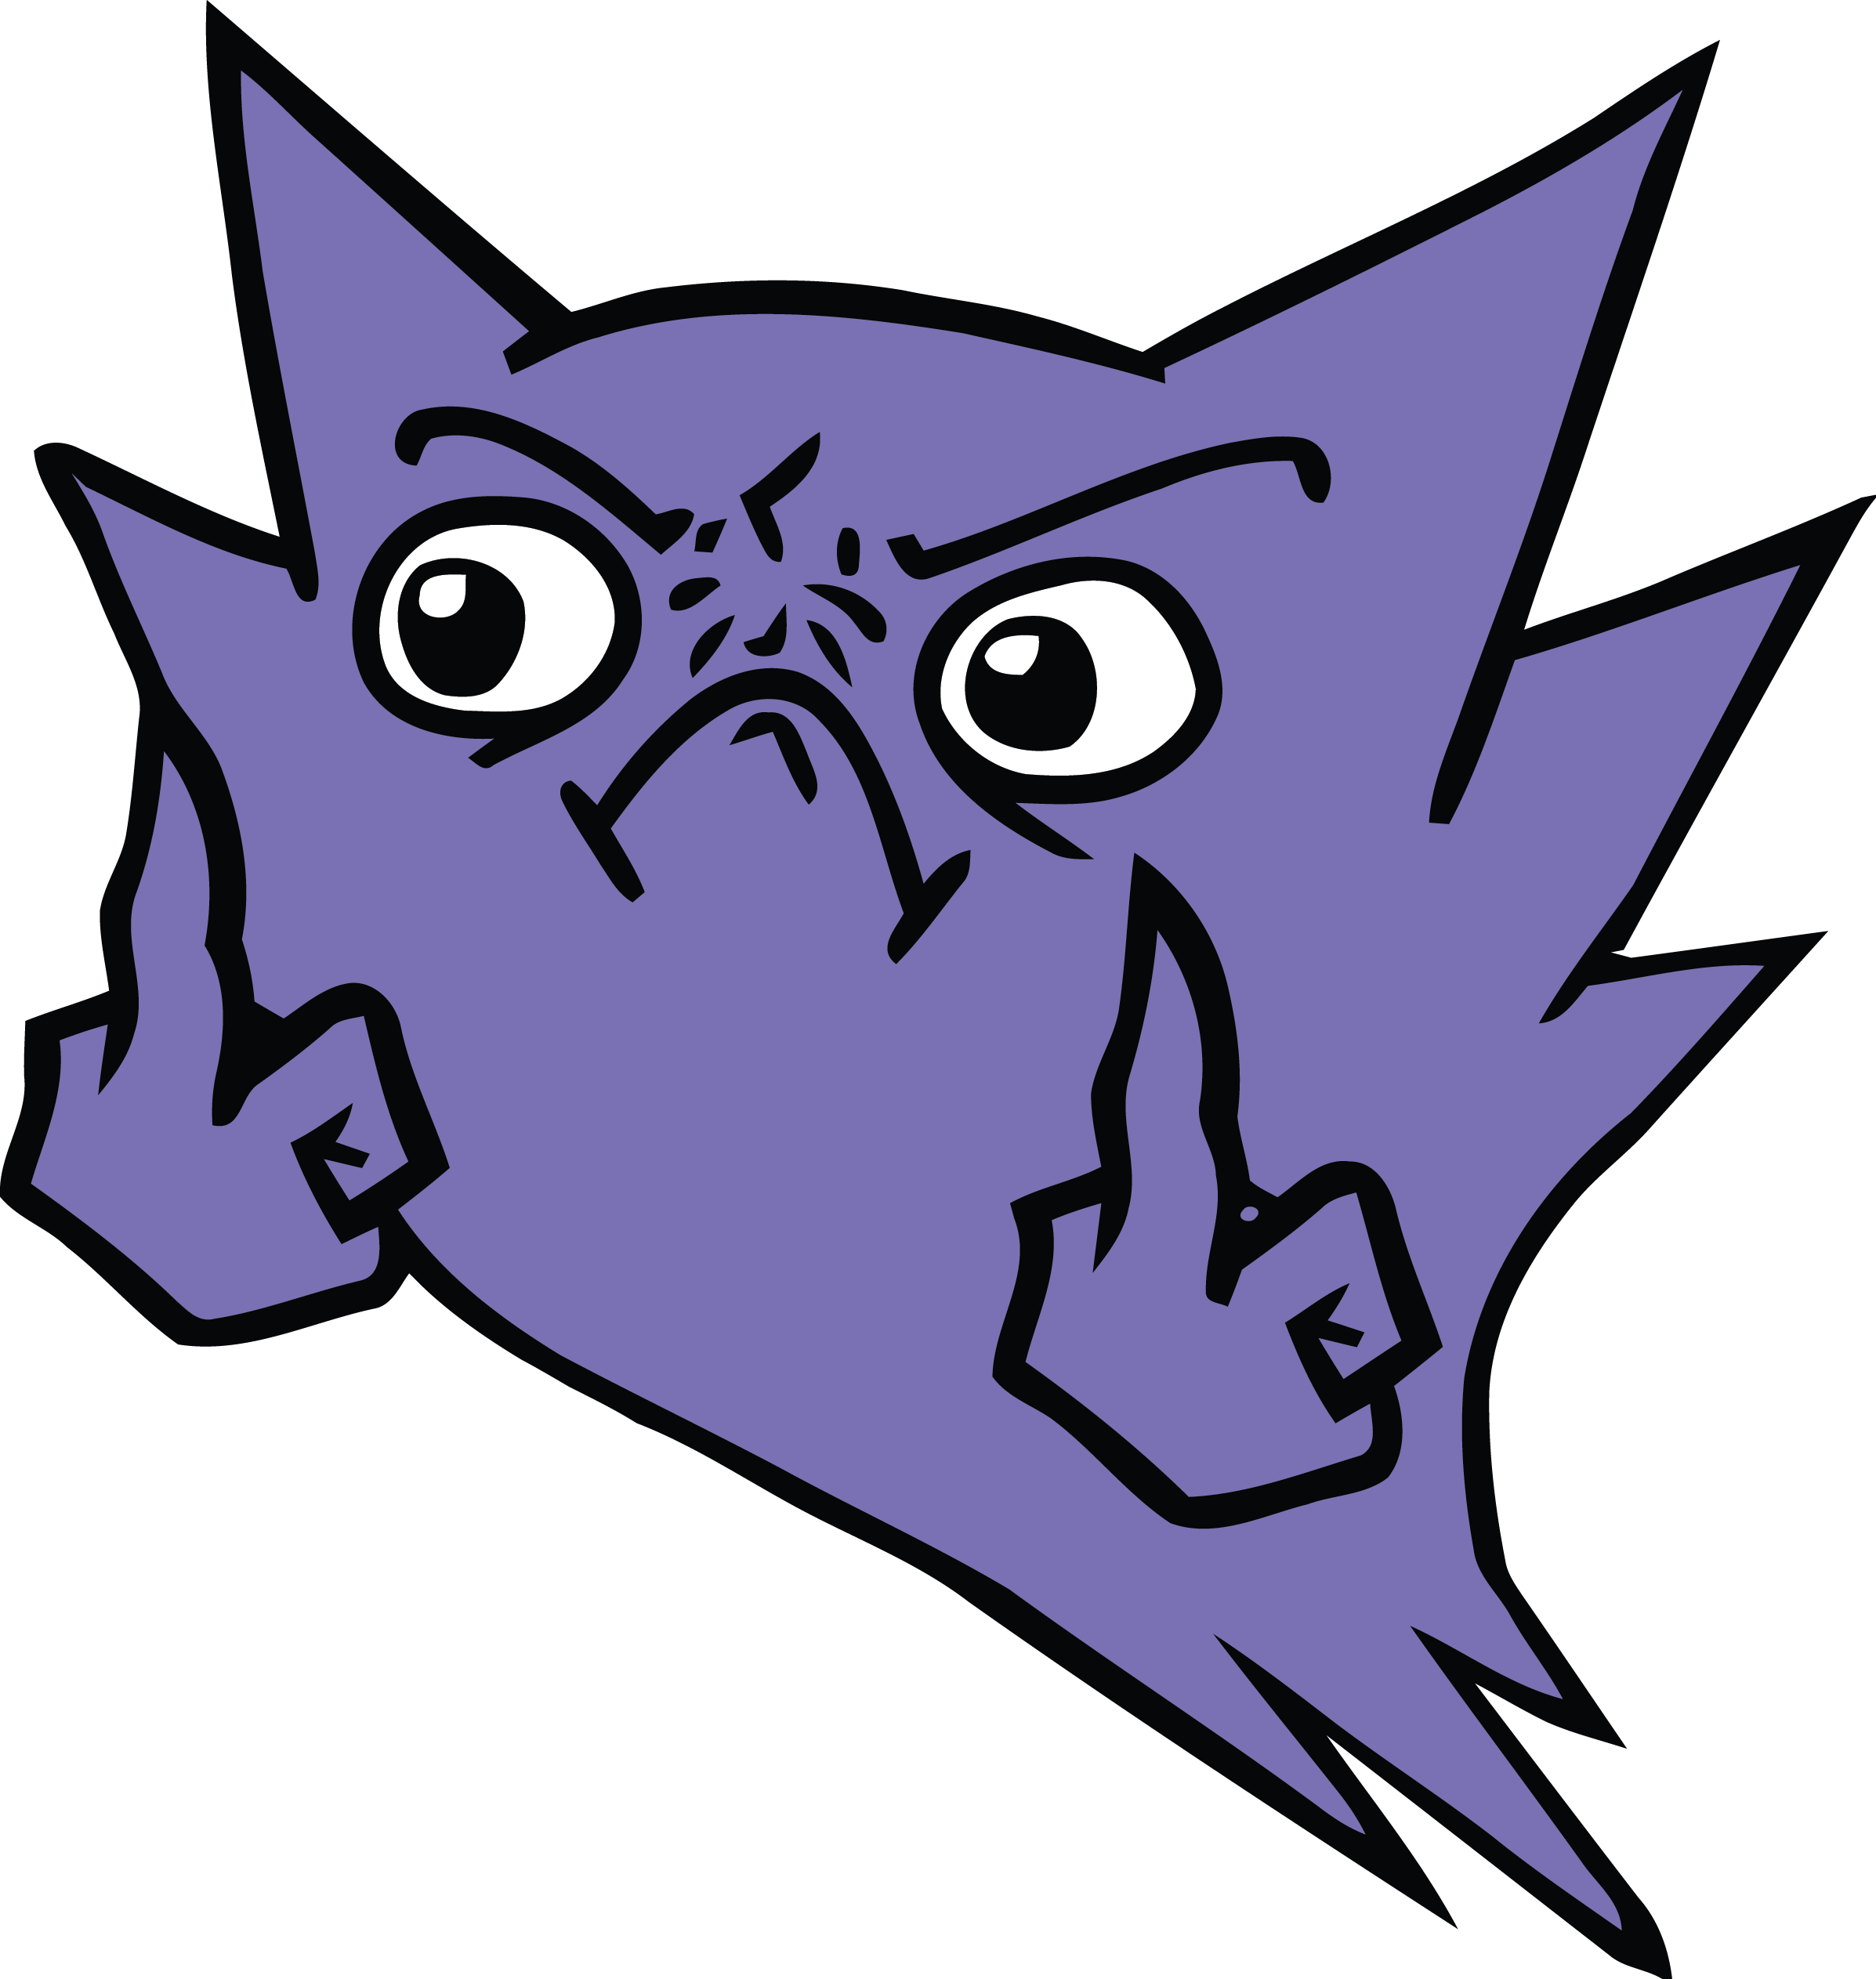 Хонтер покемон. Хонтер Генгар покемон. Покемон призрак Хантер. Фиолетовый покемон хонтер.